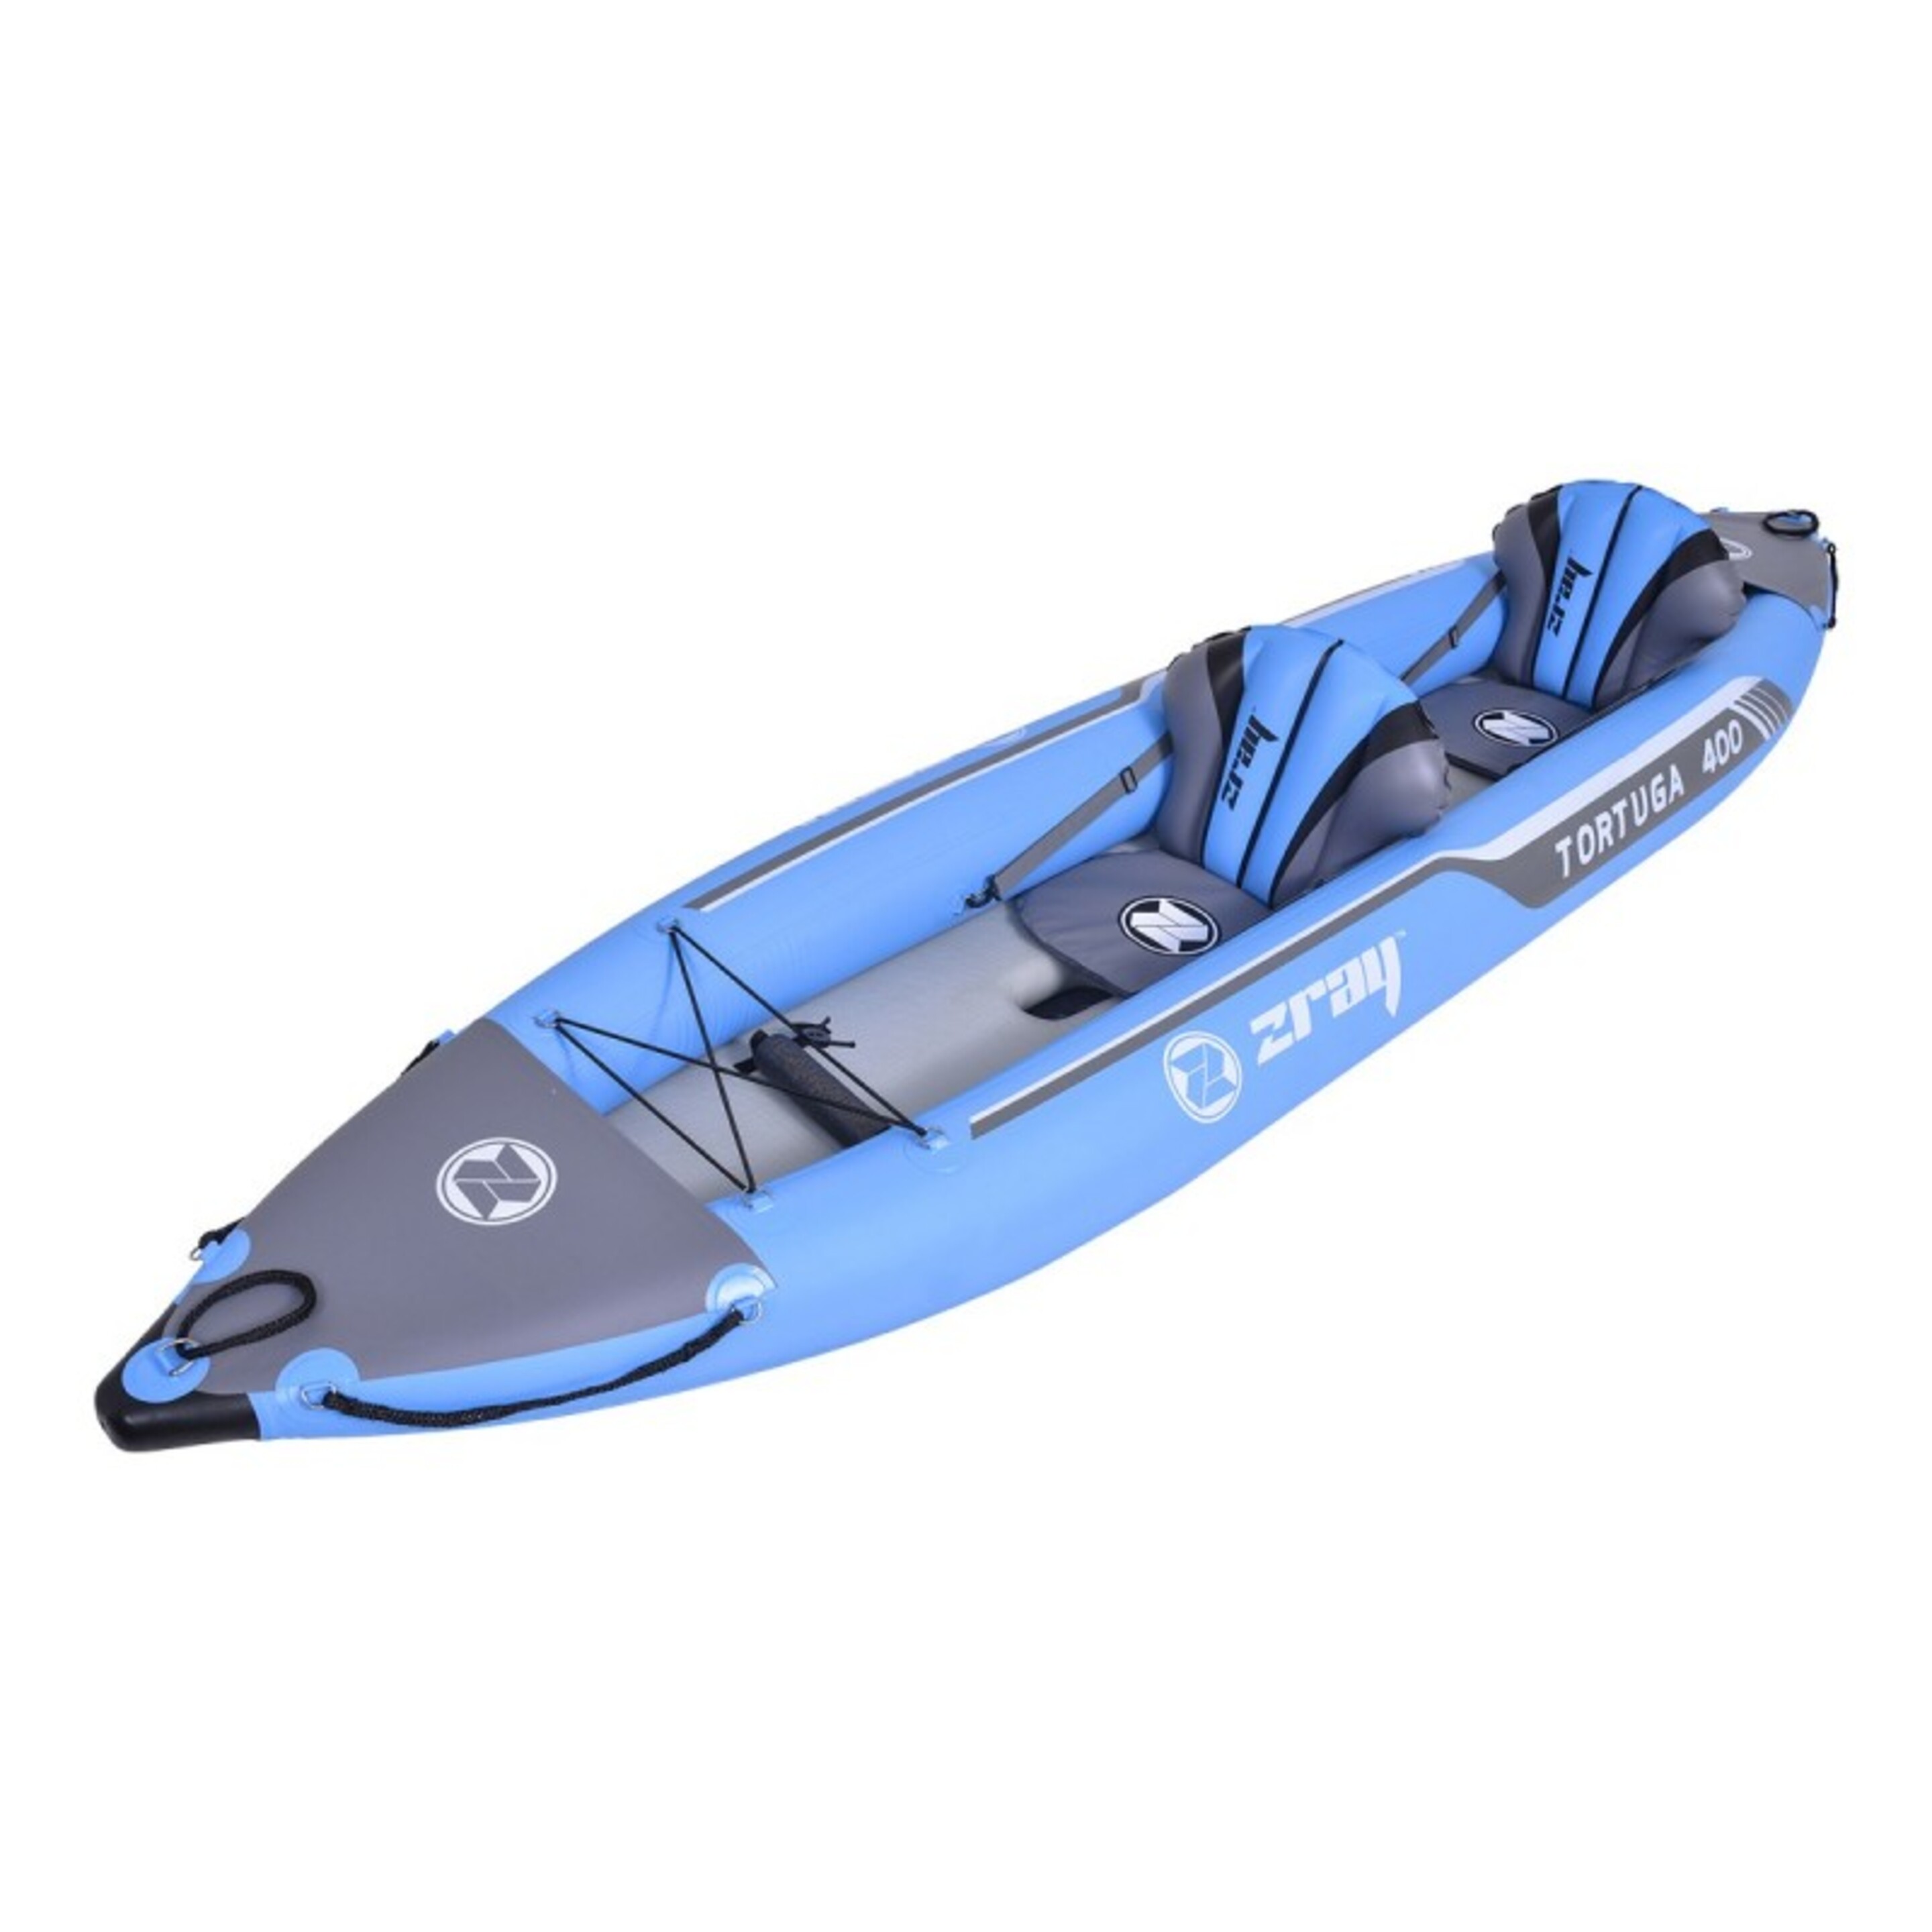 Kayak Hinchable Zray Tortuga 400 Nuevo Modelo 2021 - Multicolor - Kayak 2 plazas  MKP